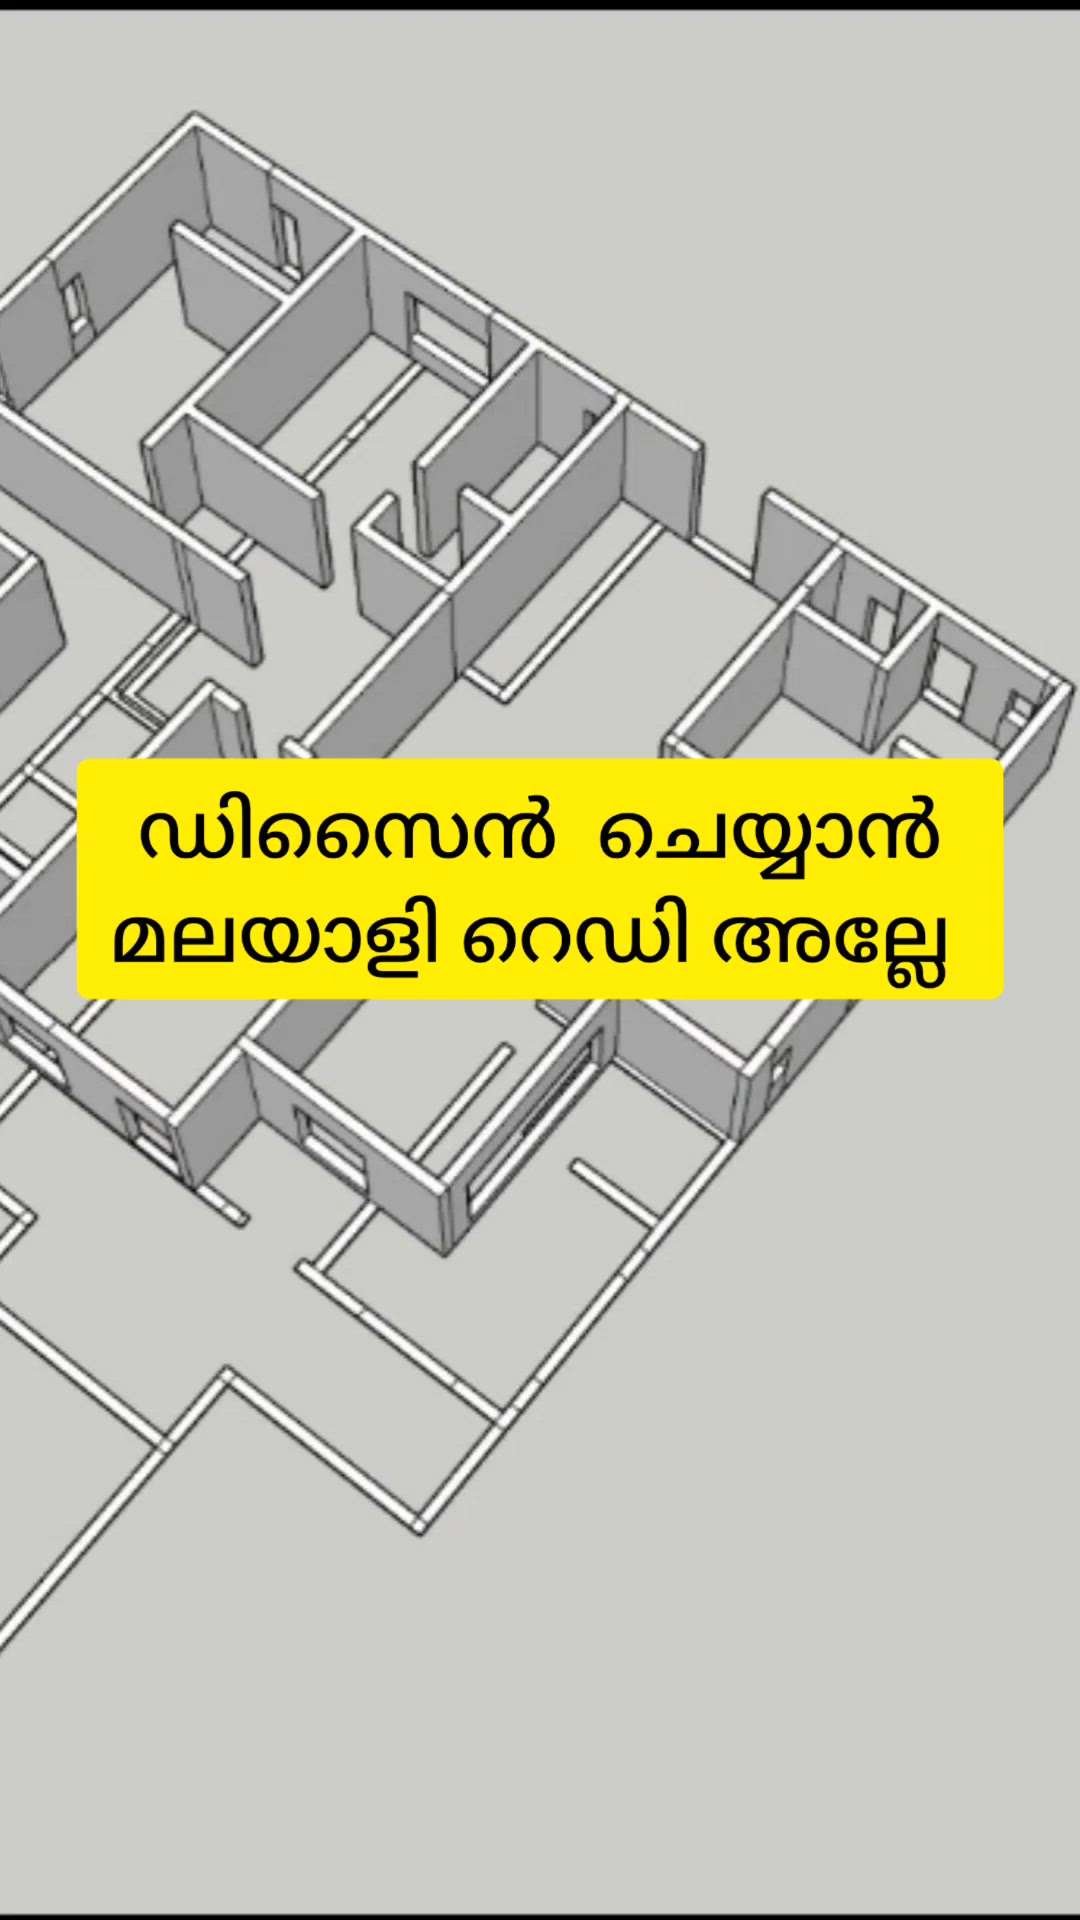 #creatorsofkolo #2ddrawings #3dmodels #architecturaldrawings #constructionplans #floorplans
#3ddesigns #modernhouse #trending  #HouseConstruction #relevance #procedure  #Kerala 
3d &2d പ്ലാൻസ് എന്നാൽ എന്താണ്, എന്ത് കൊണ്ട് 3d designs ഉണ്ടാക്കാൻ മലയാളി മടിക്കുന്നു